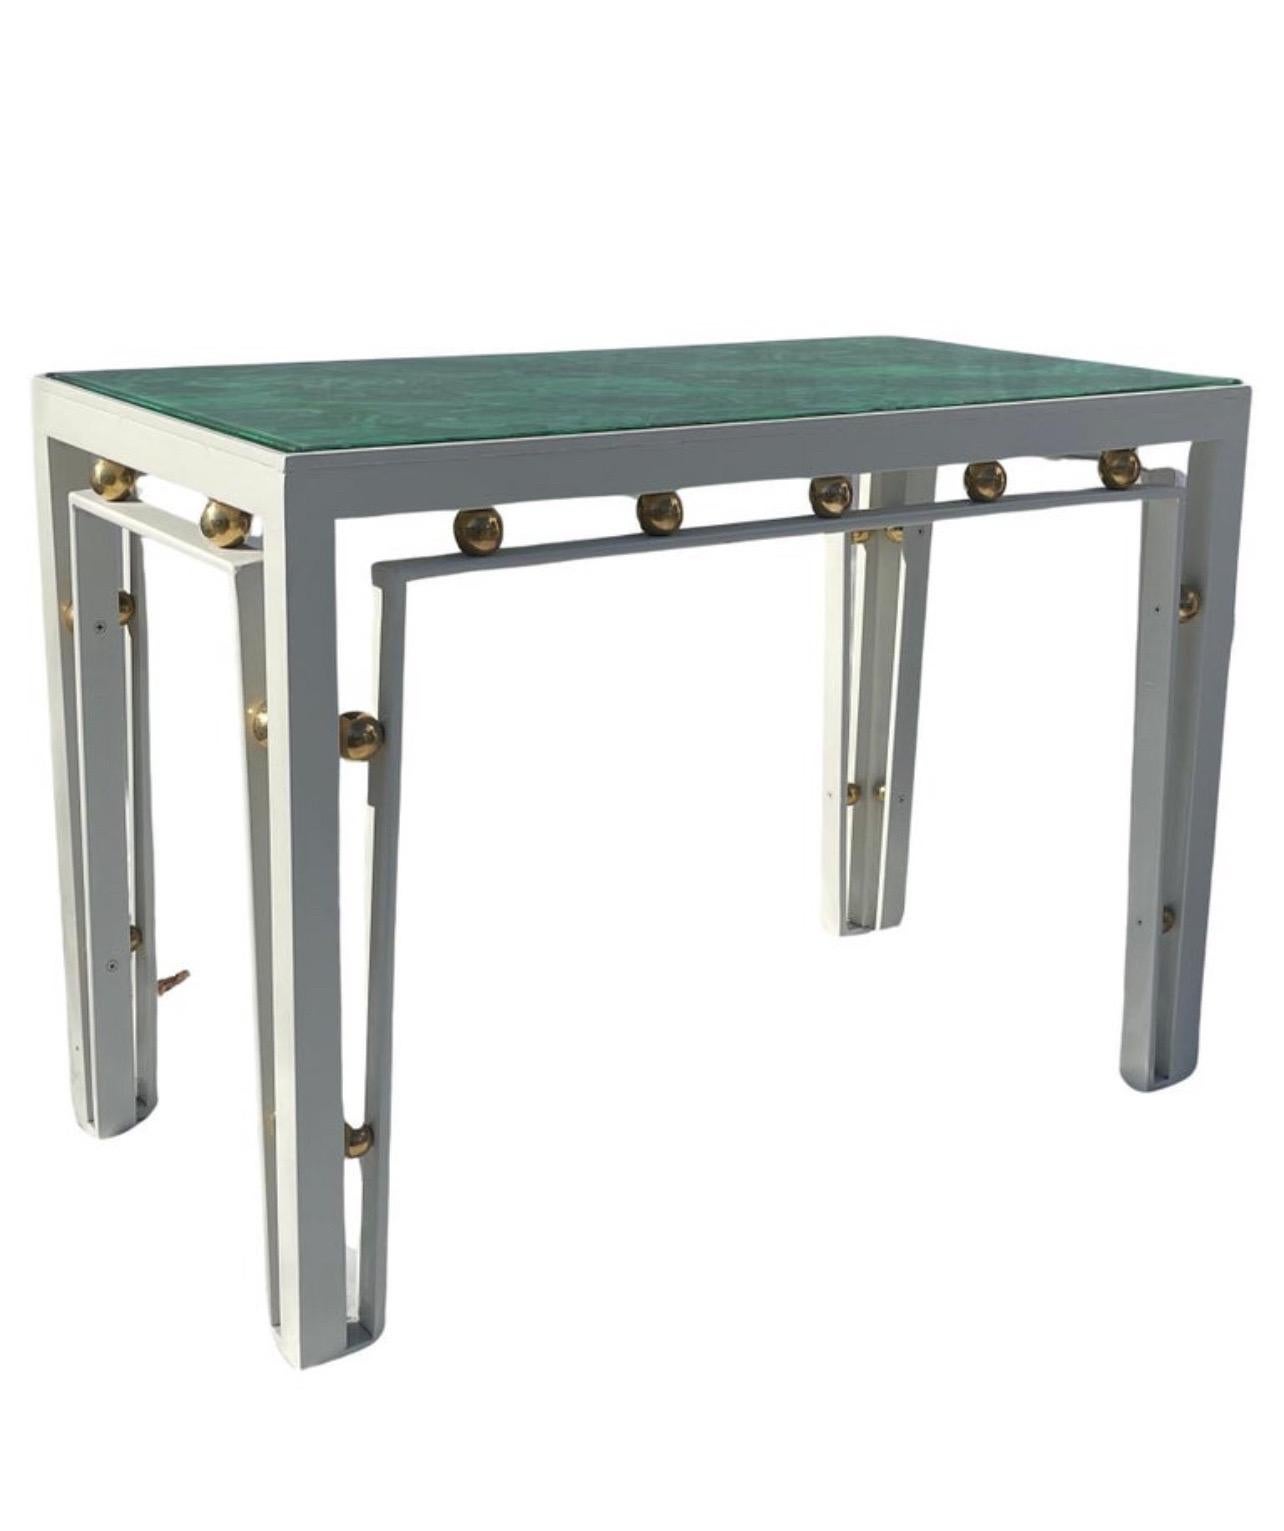 A Custom Side Table:
Dimensions: 25